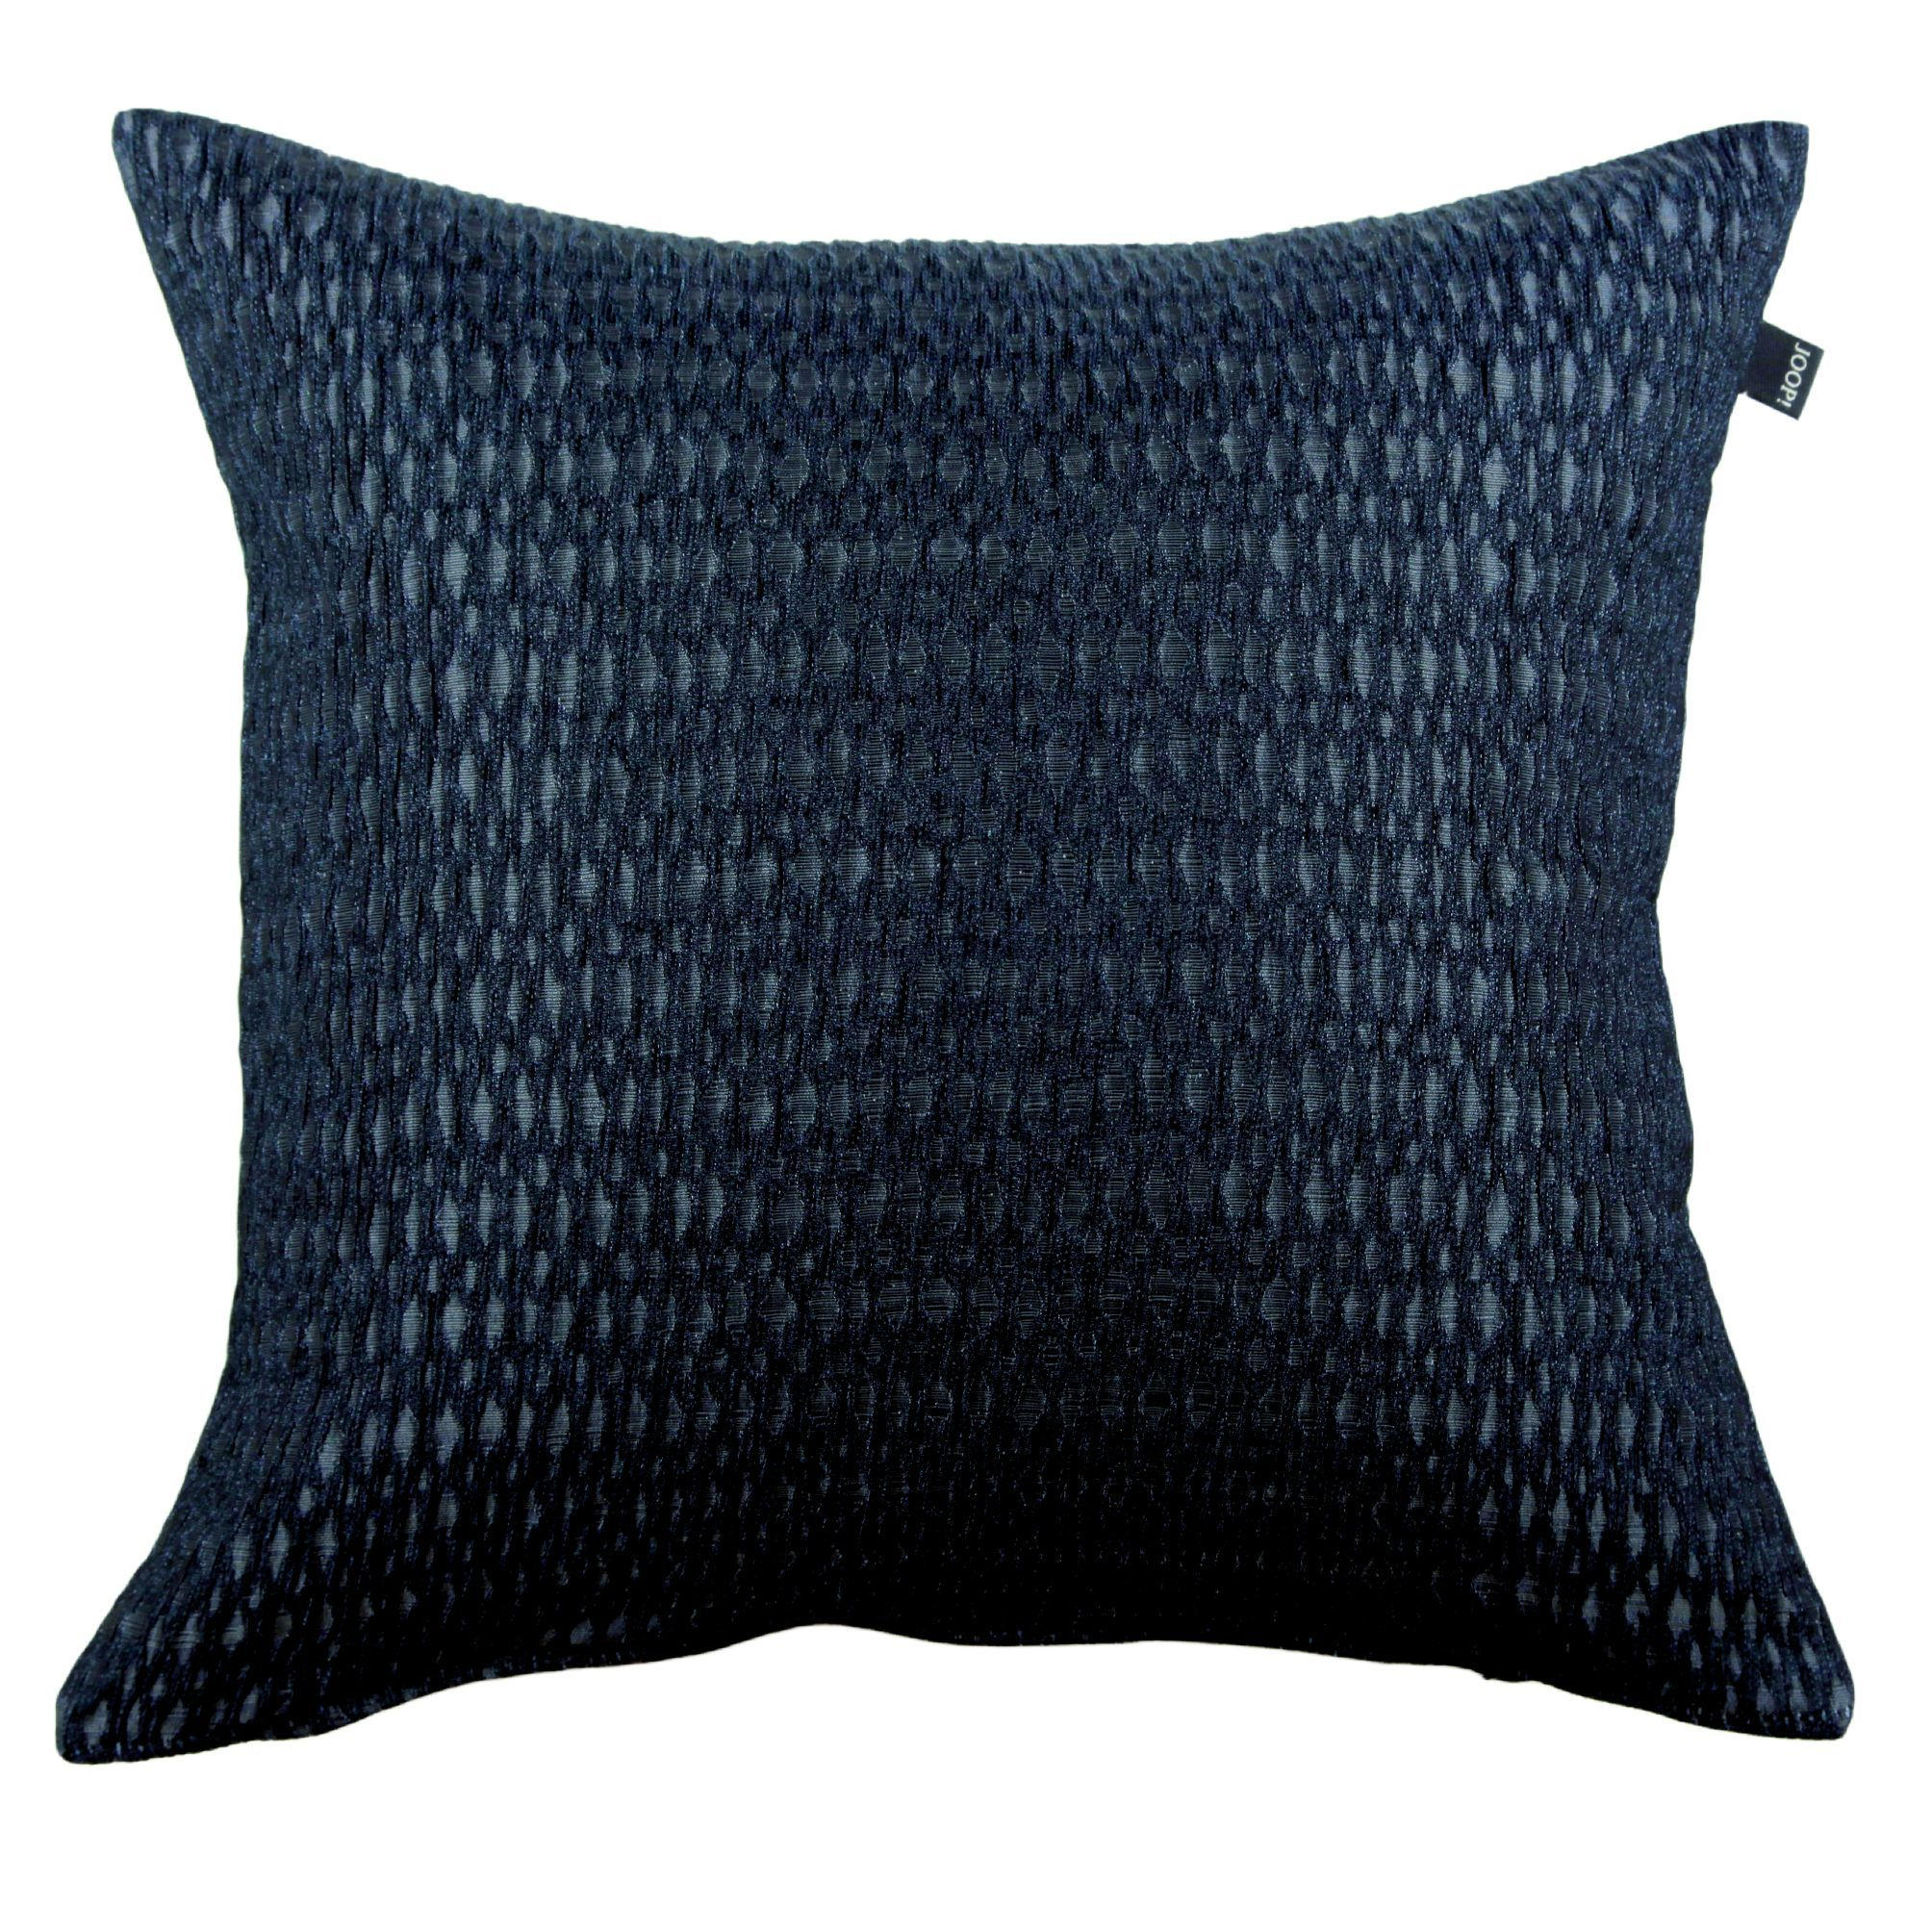 KISSENHÜLLE J!Shrink 40/40 cm  - Blau/Dunkelblau, Basics, Textil (40/40cm) - Joop!